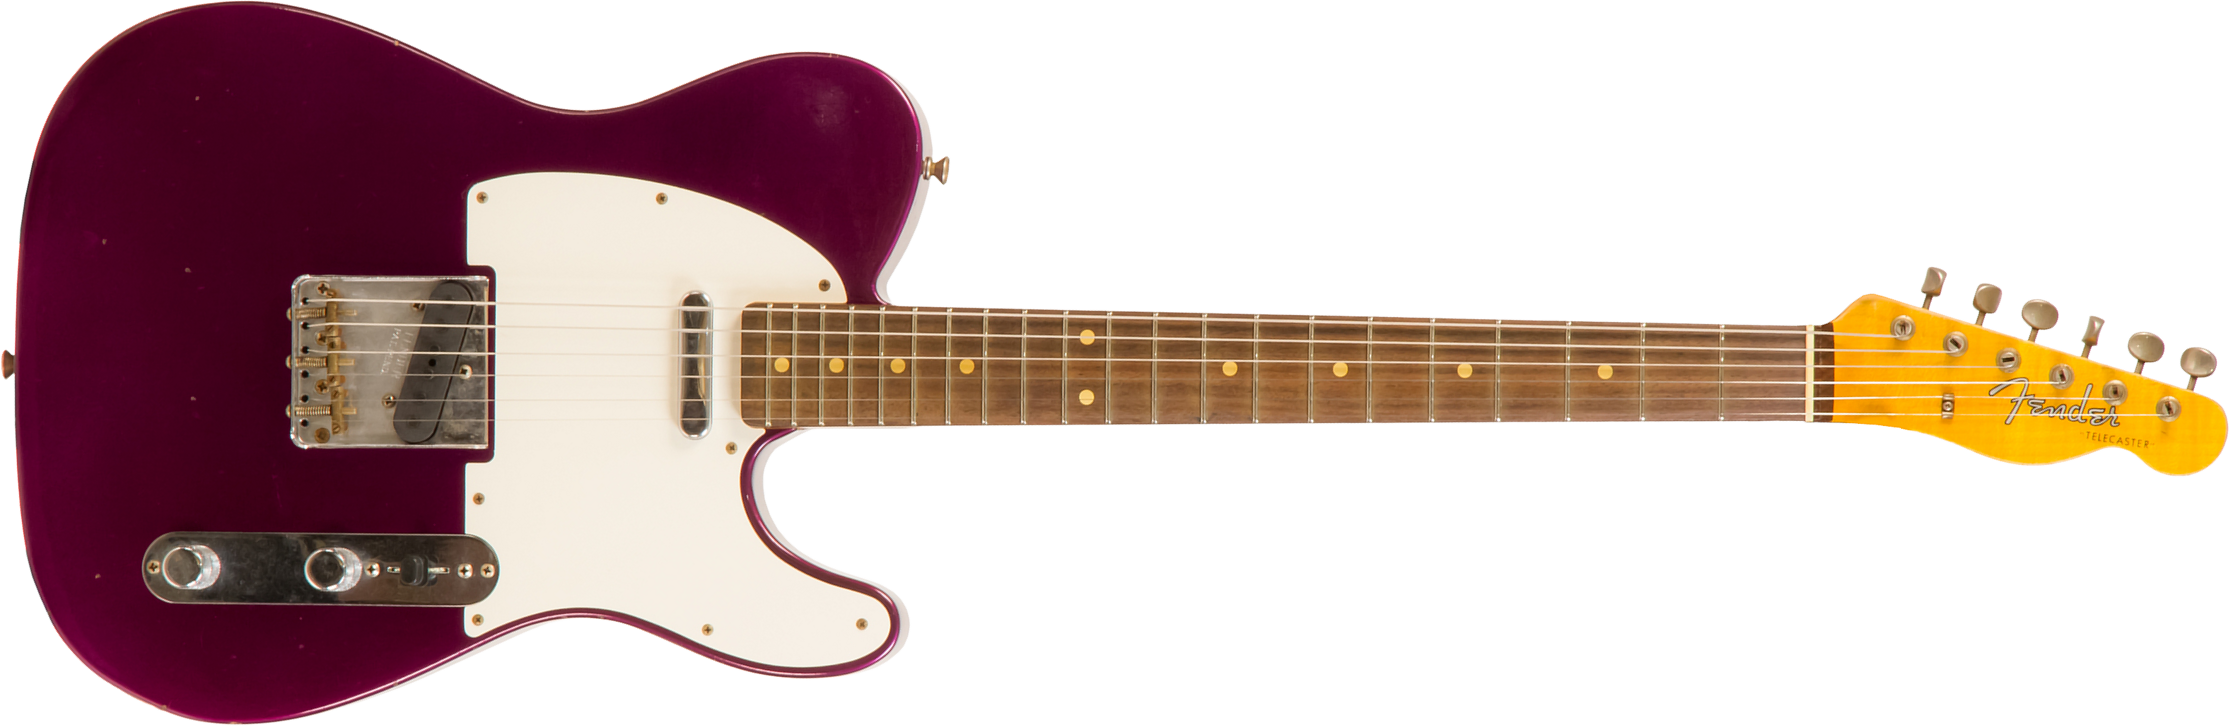 Fender Custom Shop Tele 1960 Rw #cz549121 - Journeyman Relic Purple Metallic - Guitarra eléctrica con forma de tel - Main picture